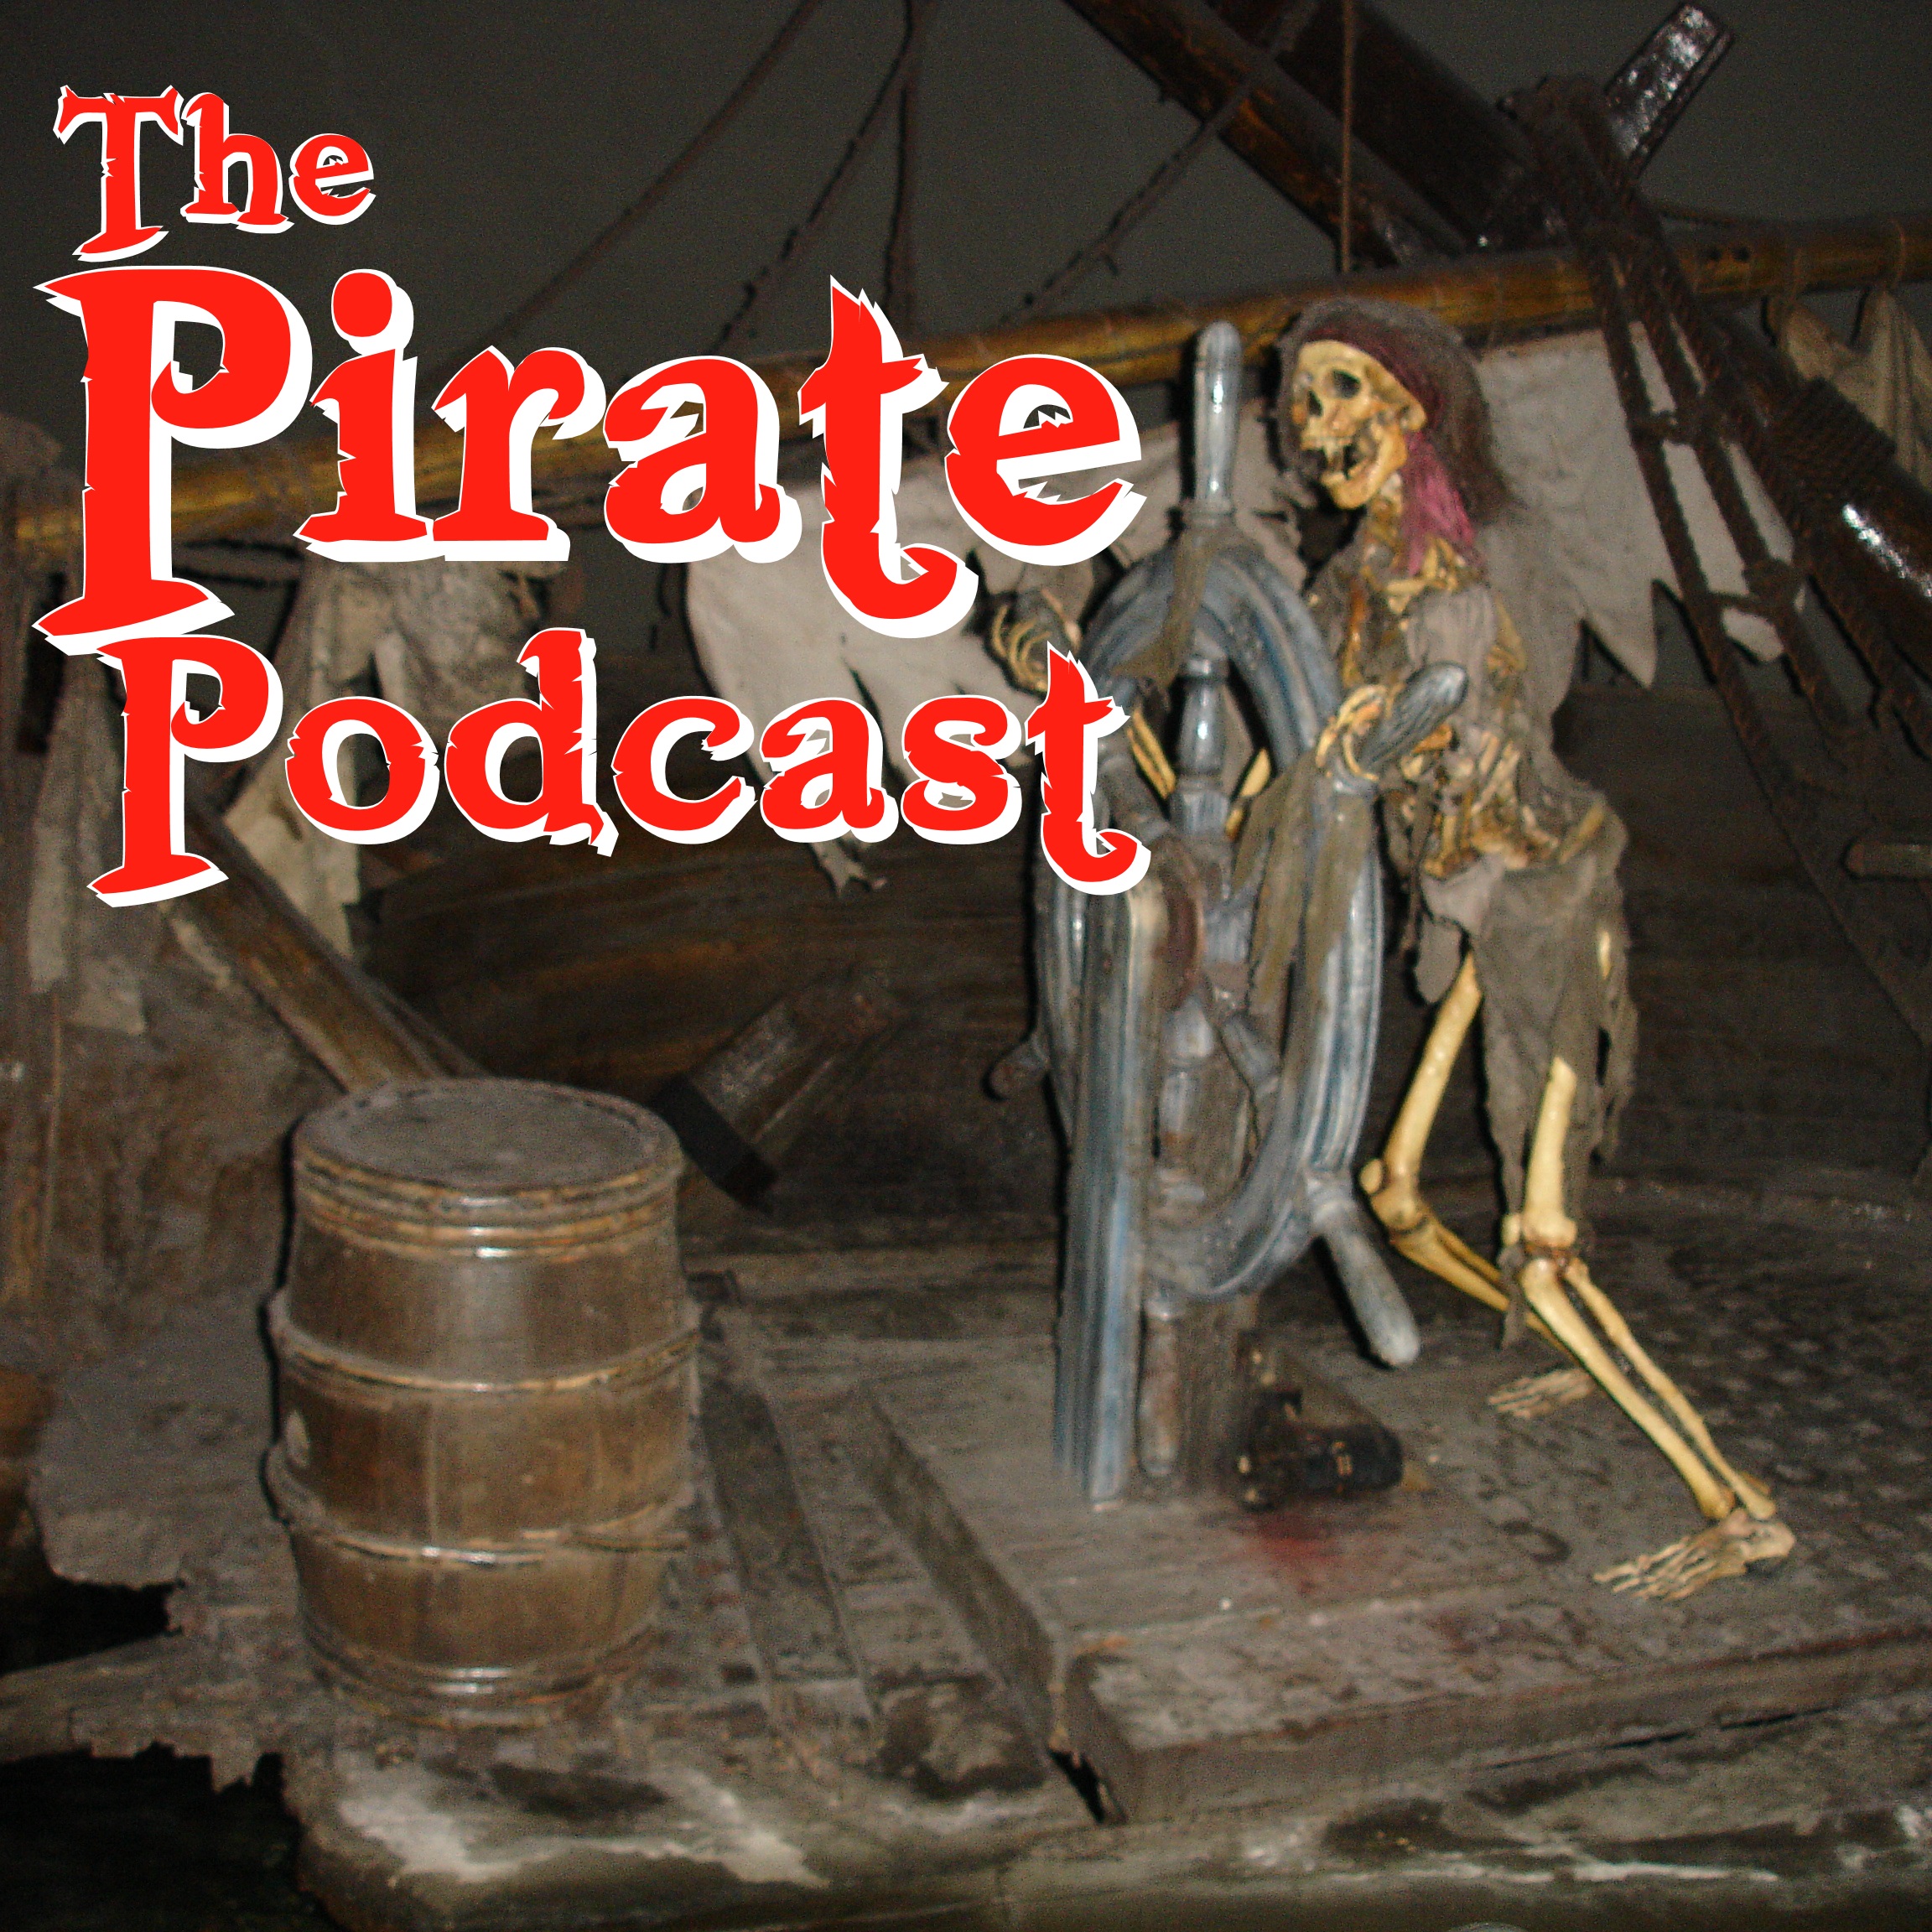 Pirate Podcast